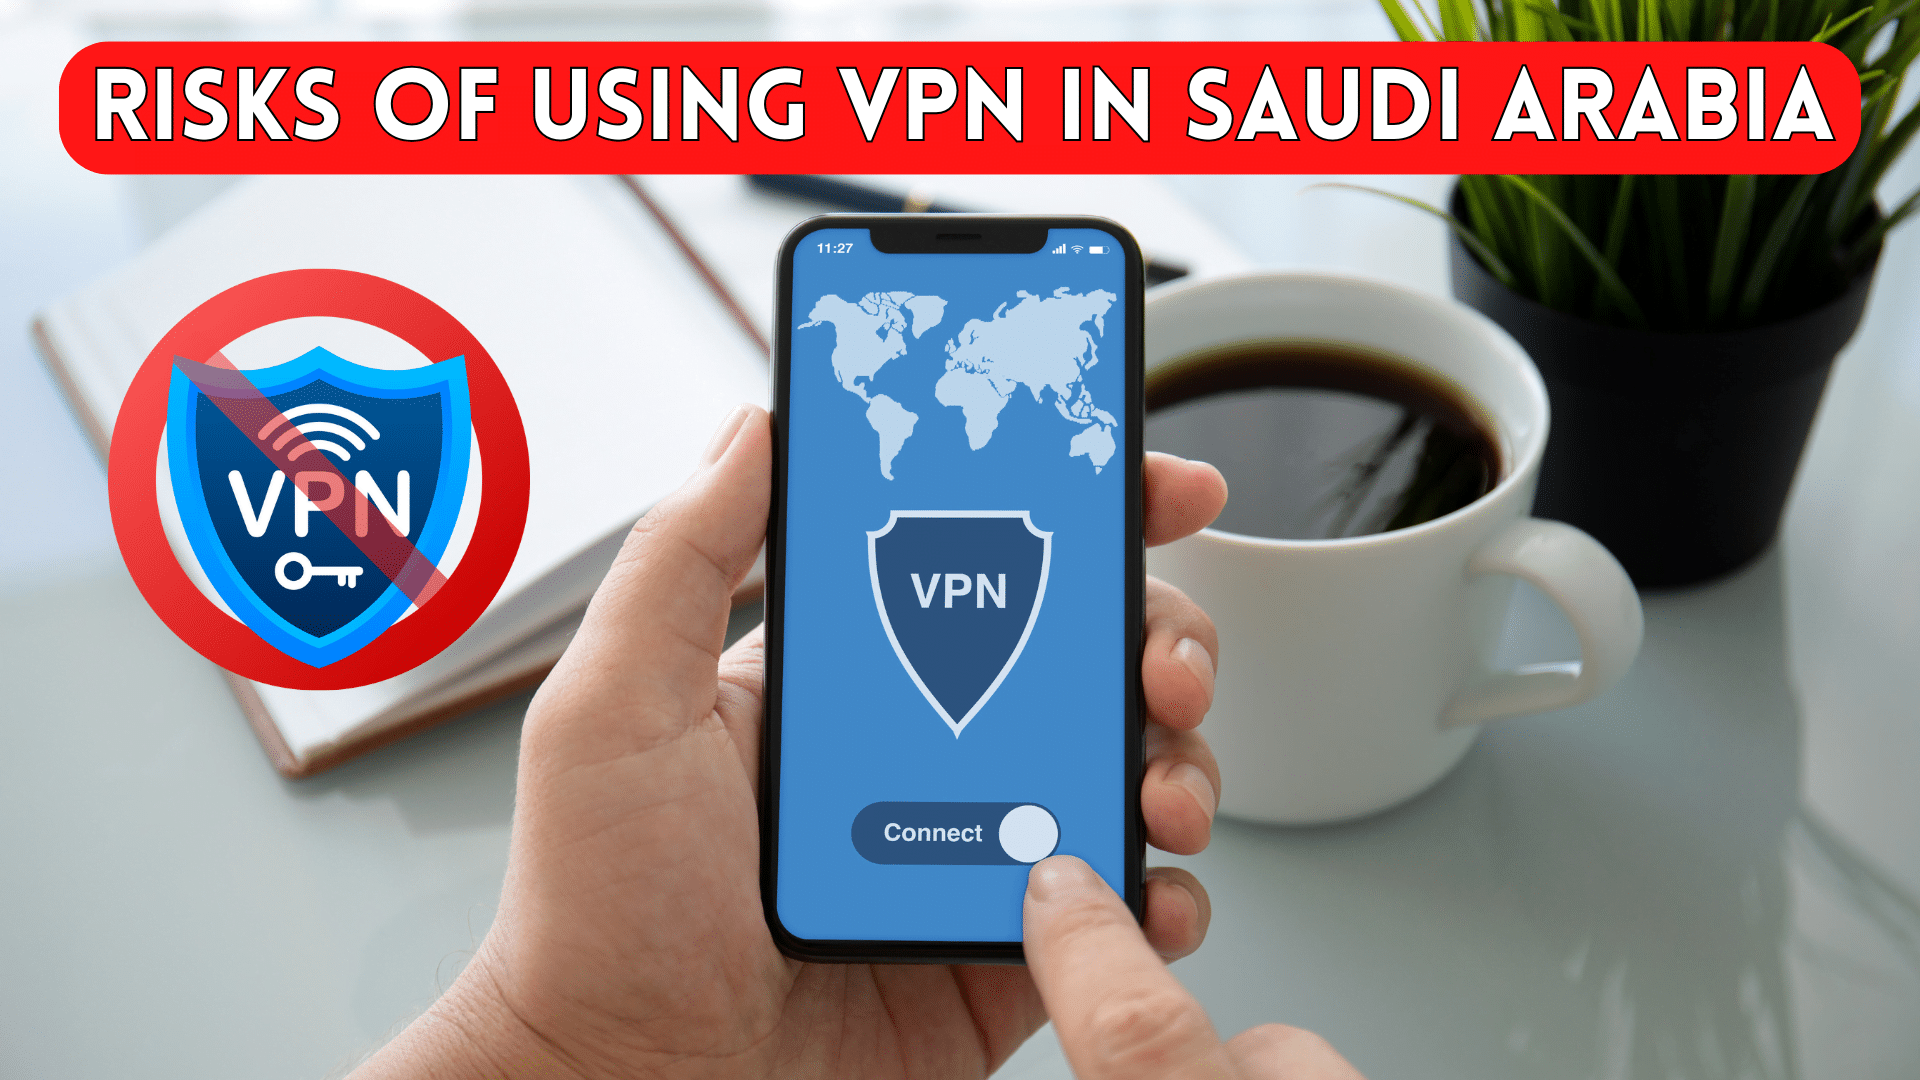 Risks of Using VPNs in Saudi Arabia